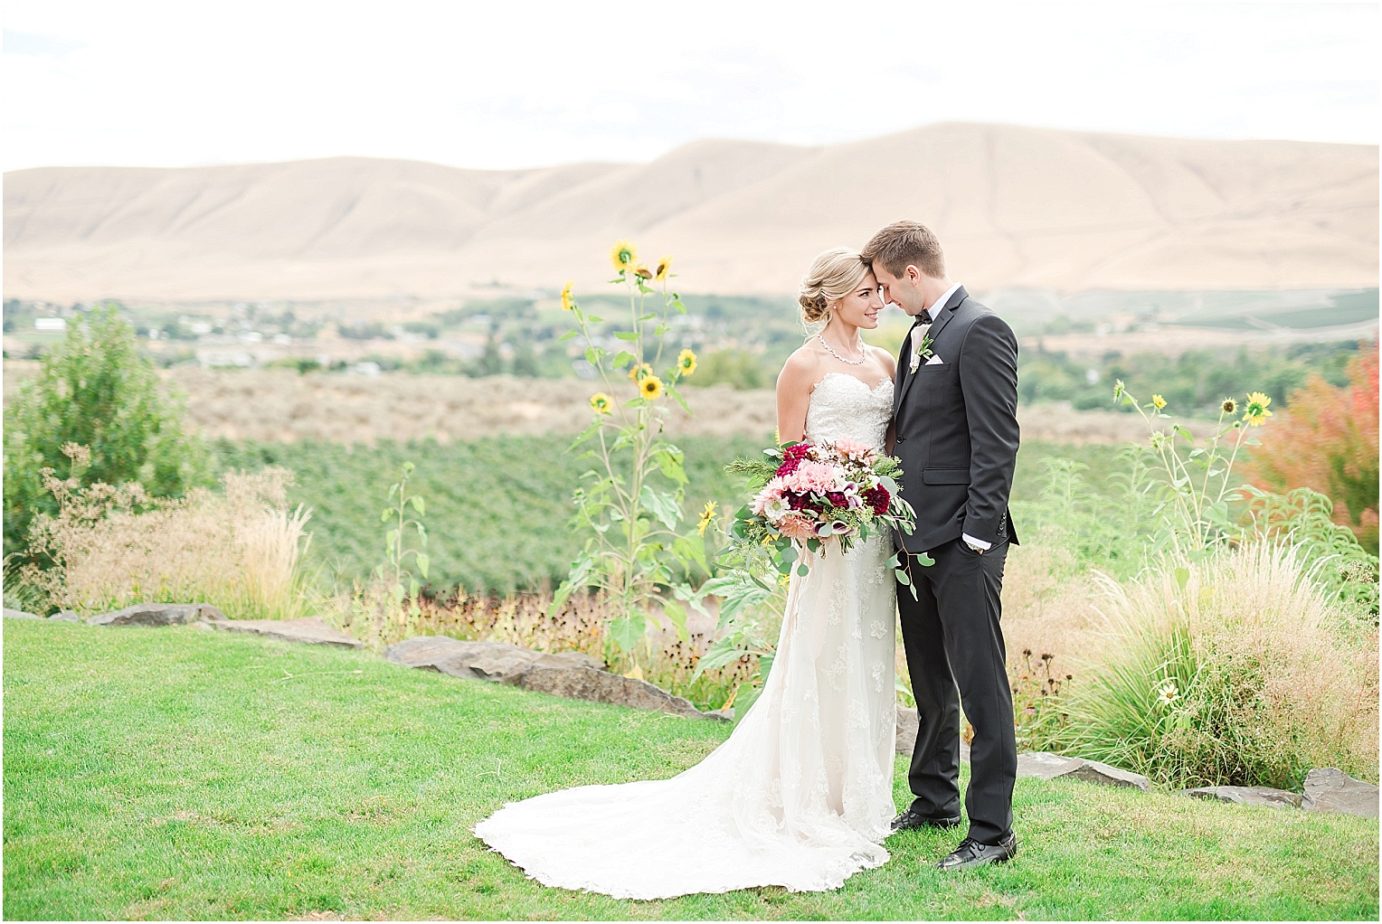 Terra Blanca Winery Wedding Benton City Photographer Armin and Kendall bride and groom portraits